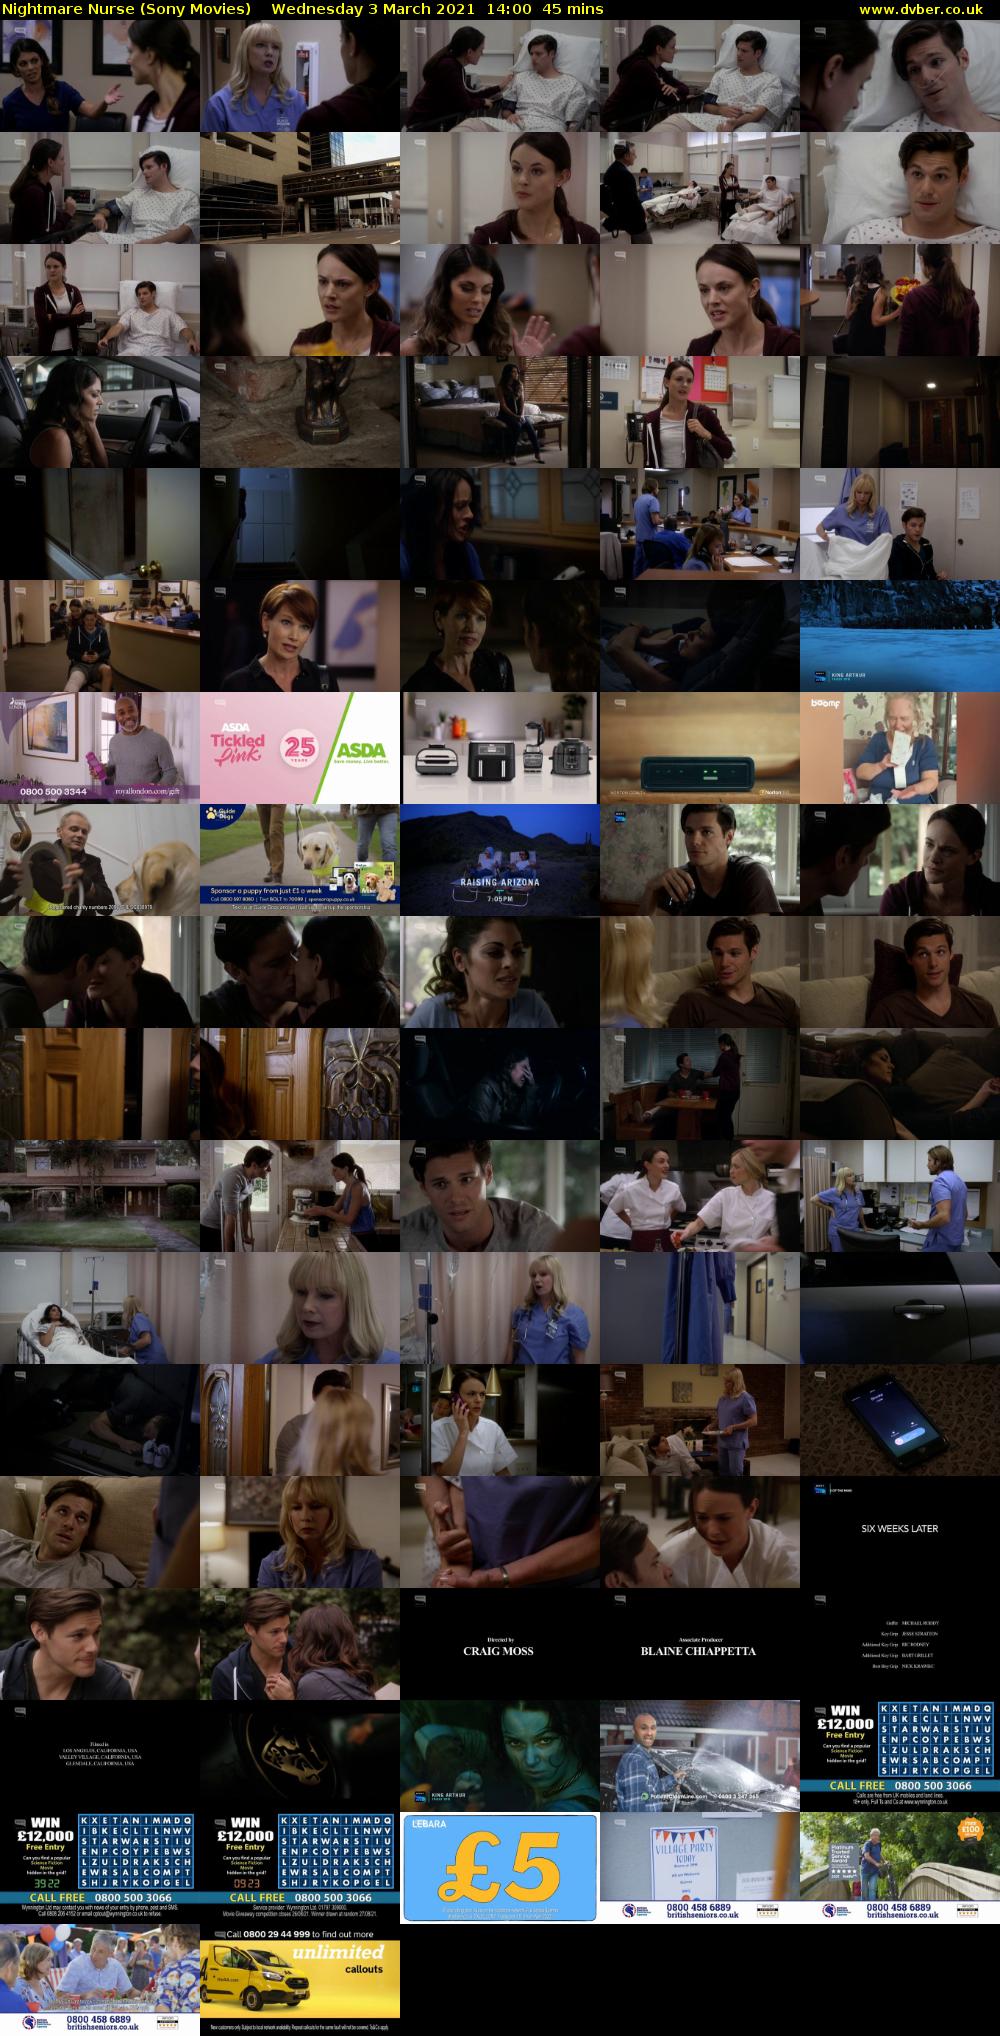 Nightmare Nurse (Sony Movies) Wednesday 3 March 2021 14:00 - 14:45